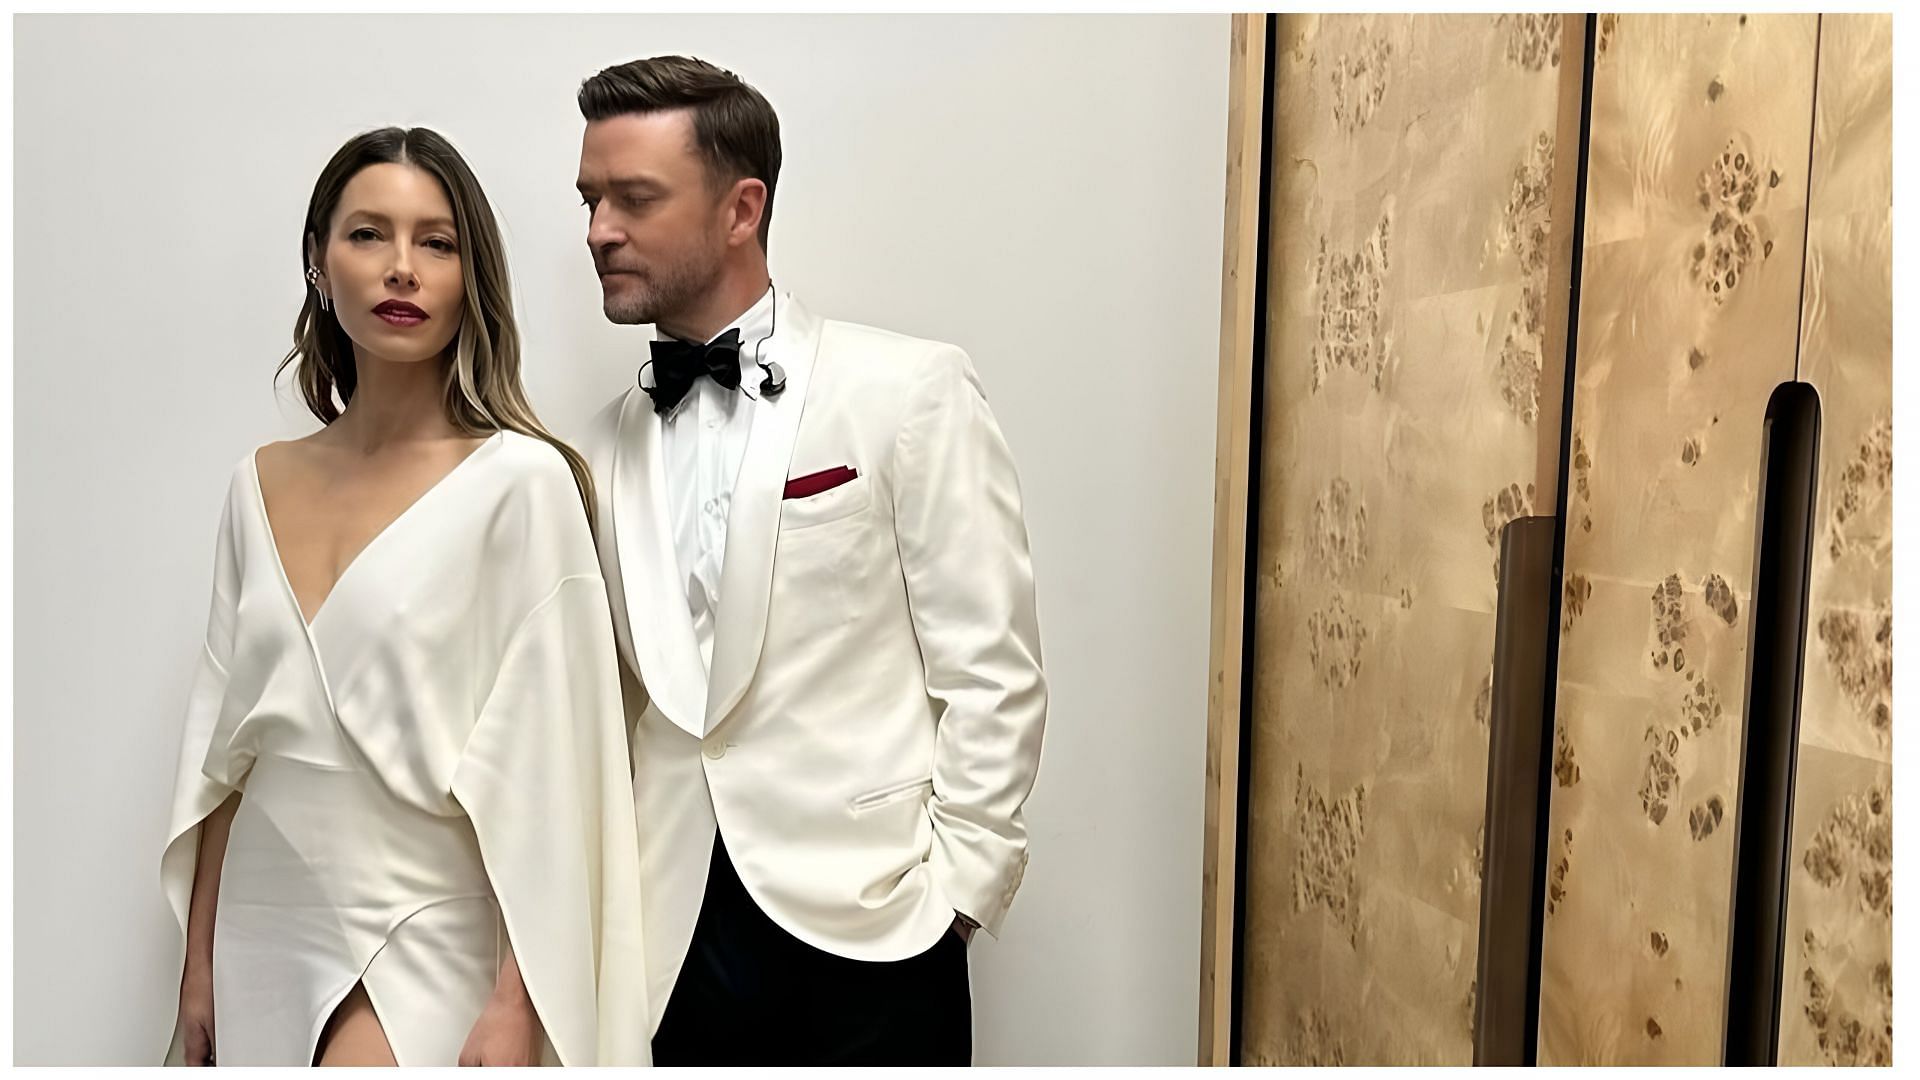 Justin Timberlake with his partner Jessica Biel (Image via official Instagram @jessicabiel)